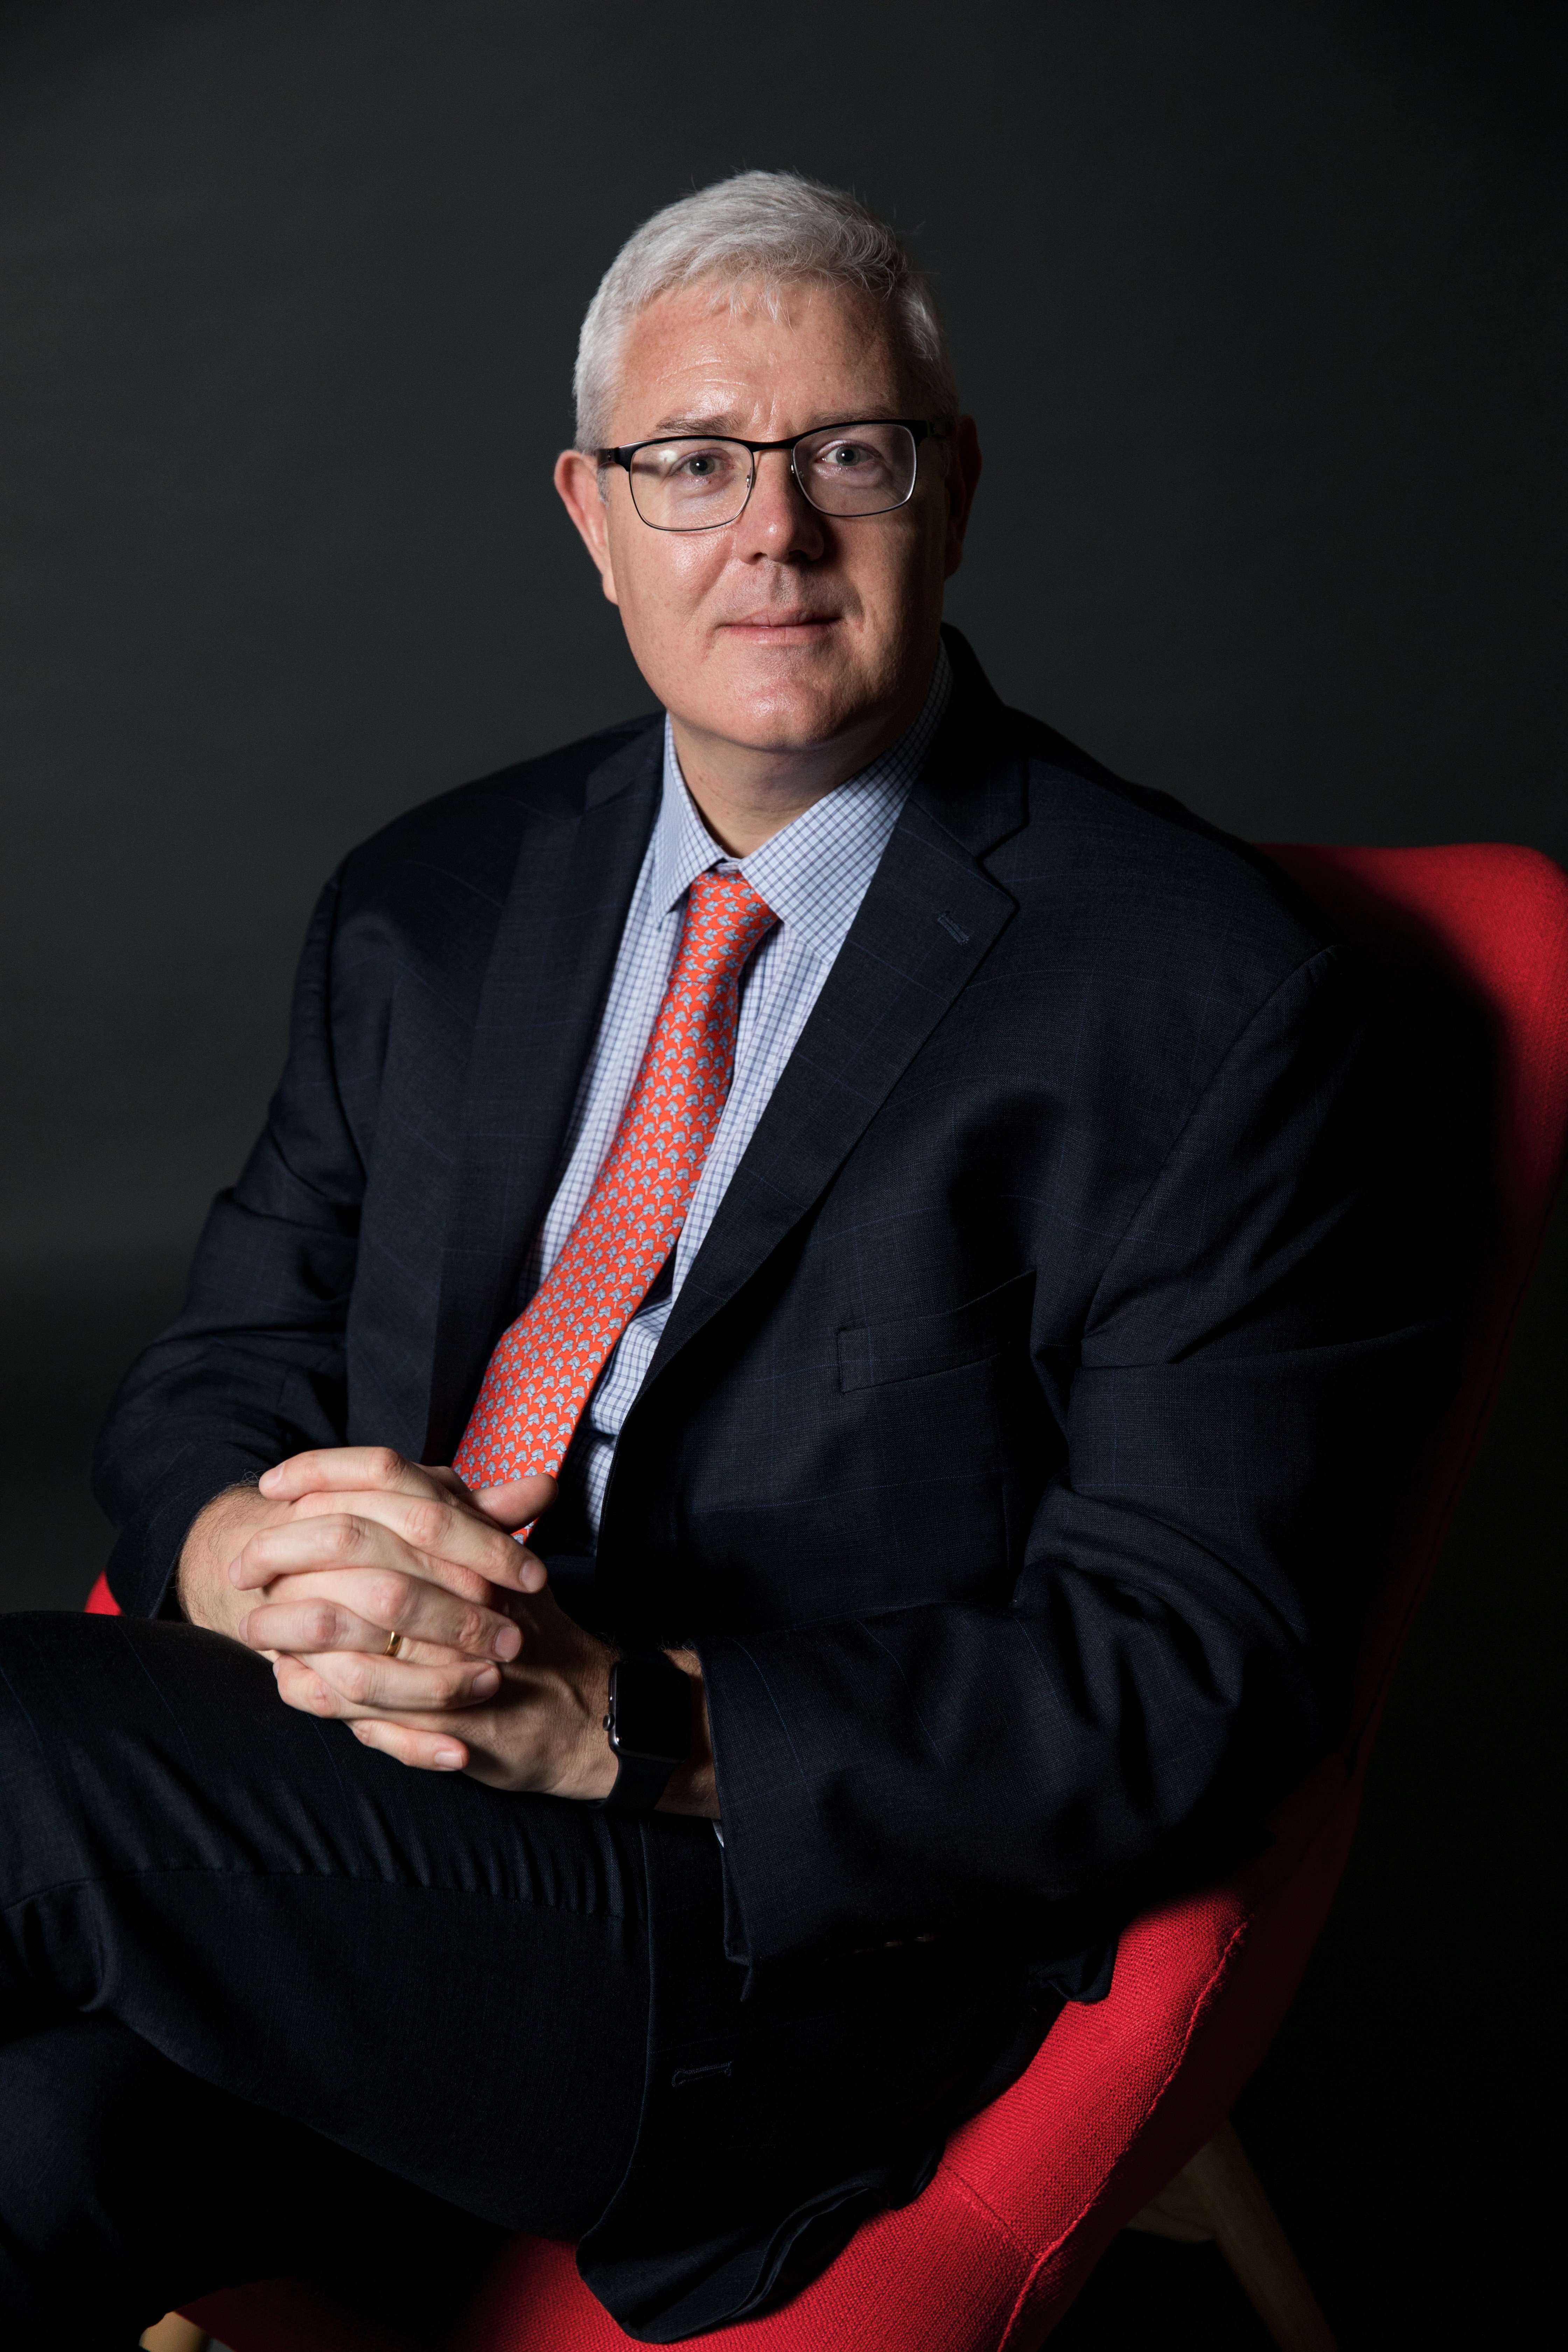 Stephen Brammer, executive dean